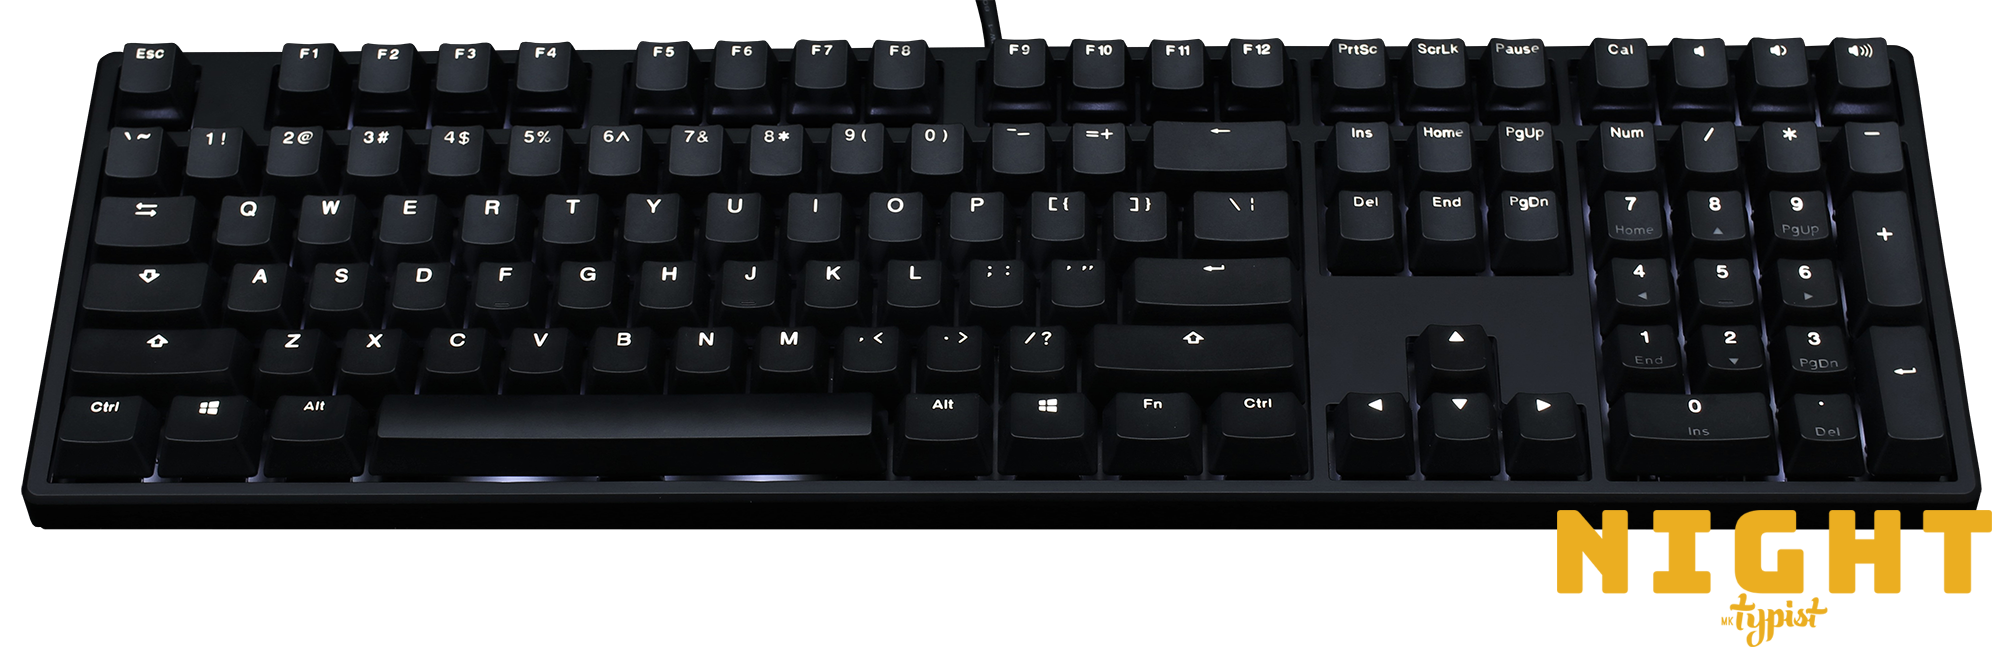 MK Night Typist Warm White LED Mechanical Keyboard